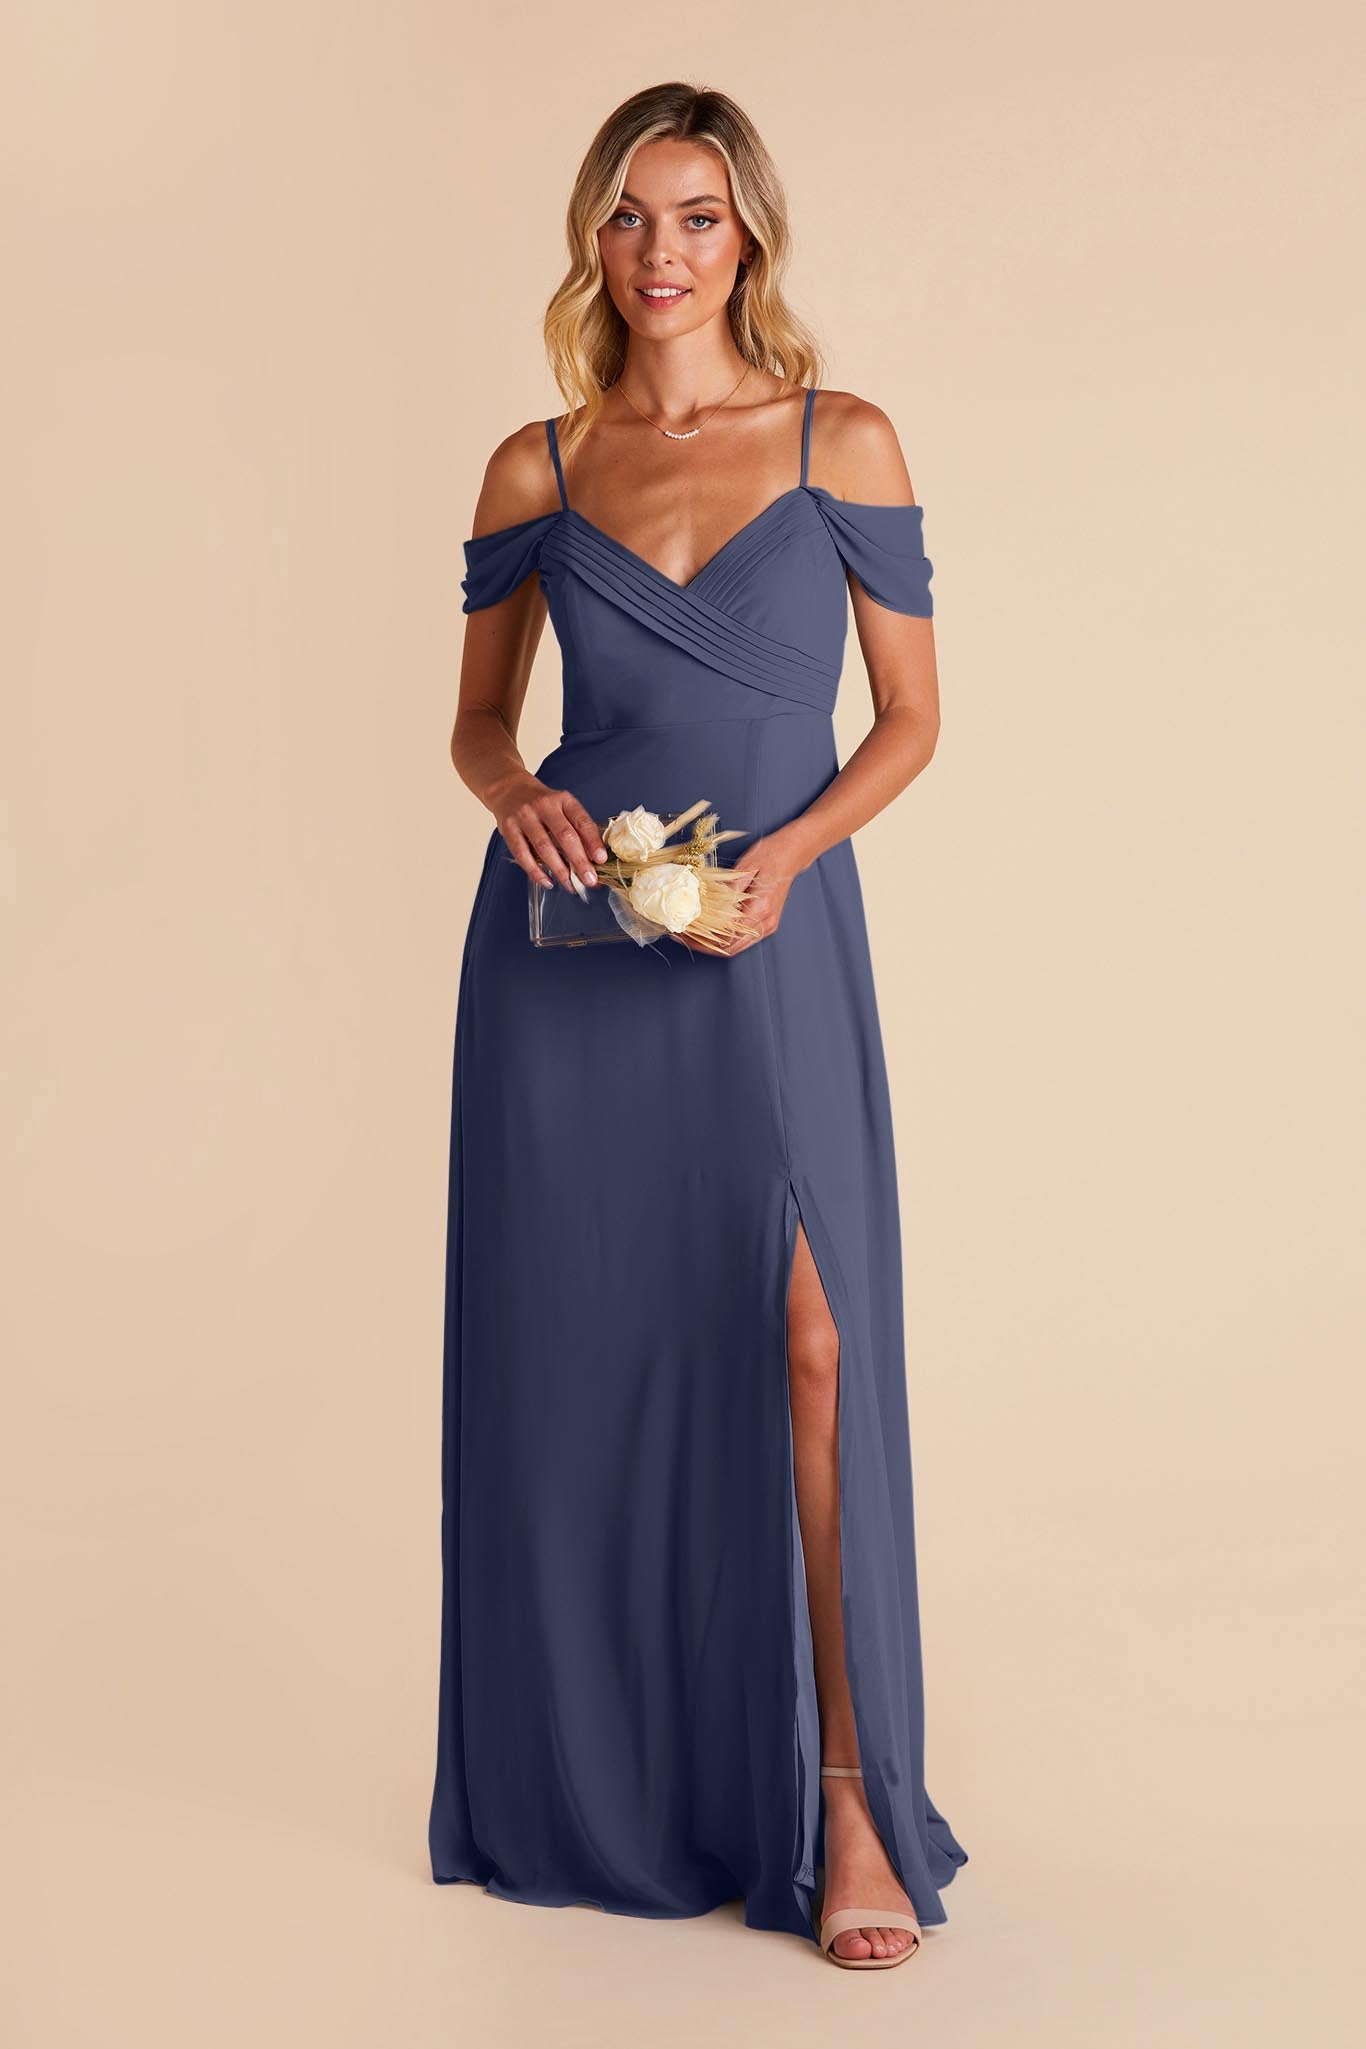 Slate Blue Spence Convertible Dress by Birdy Grey